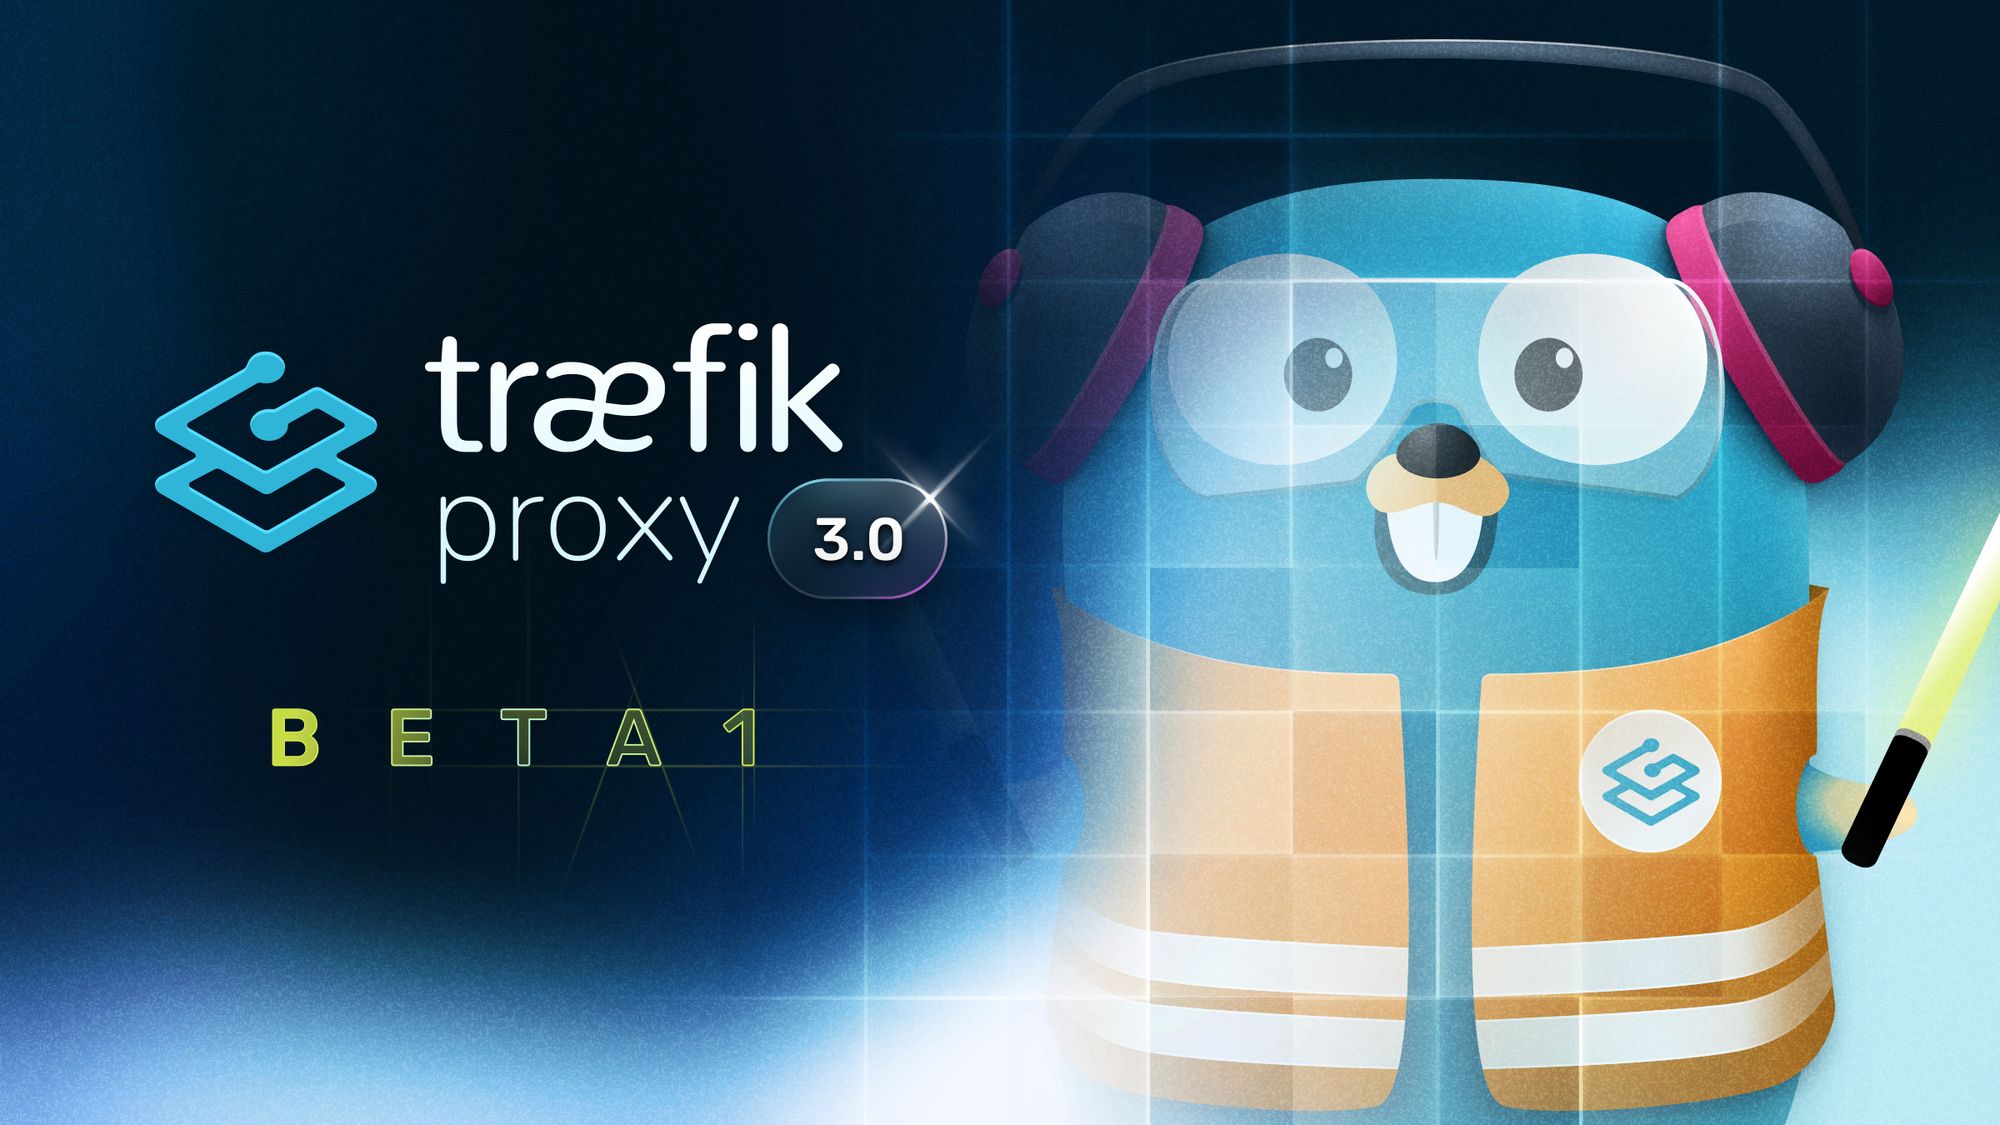 announcing traefik proxy 3.0 beta 1